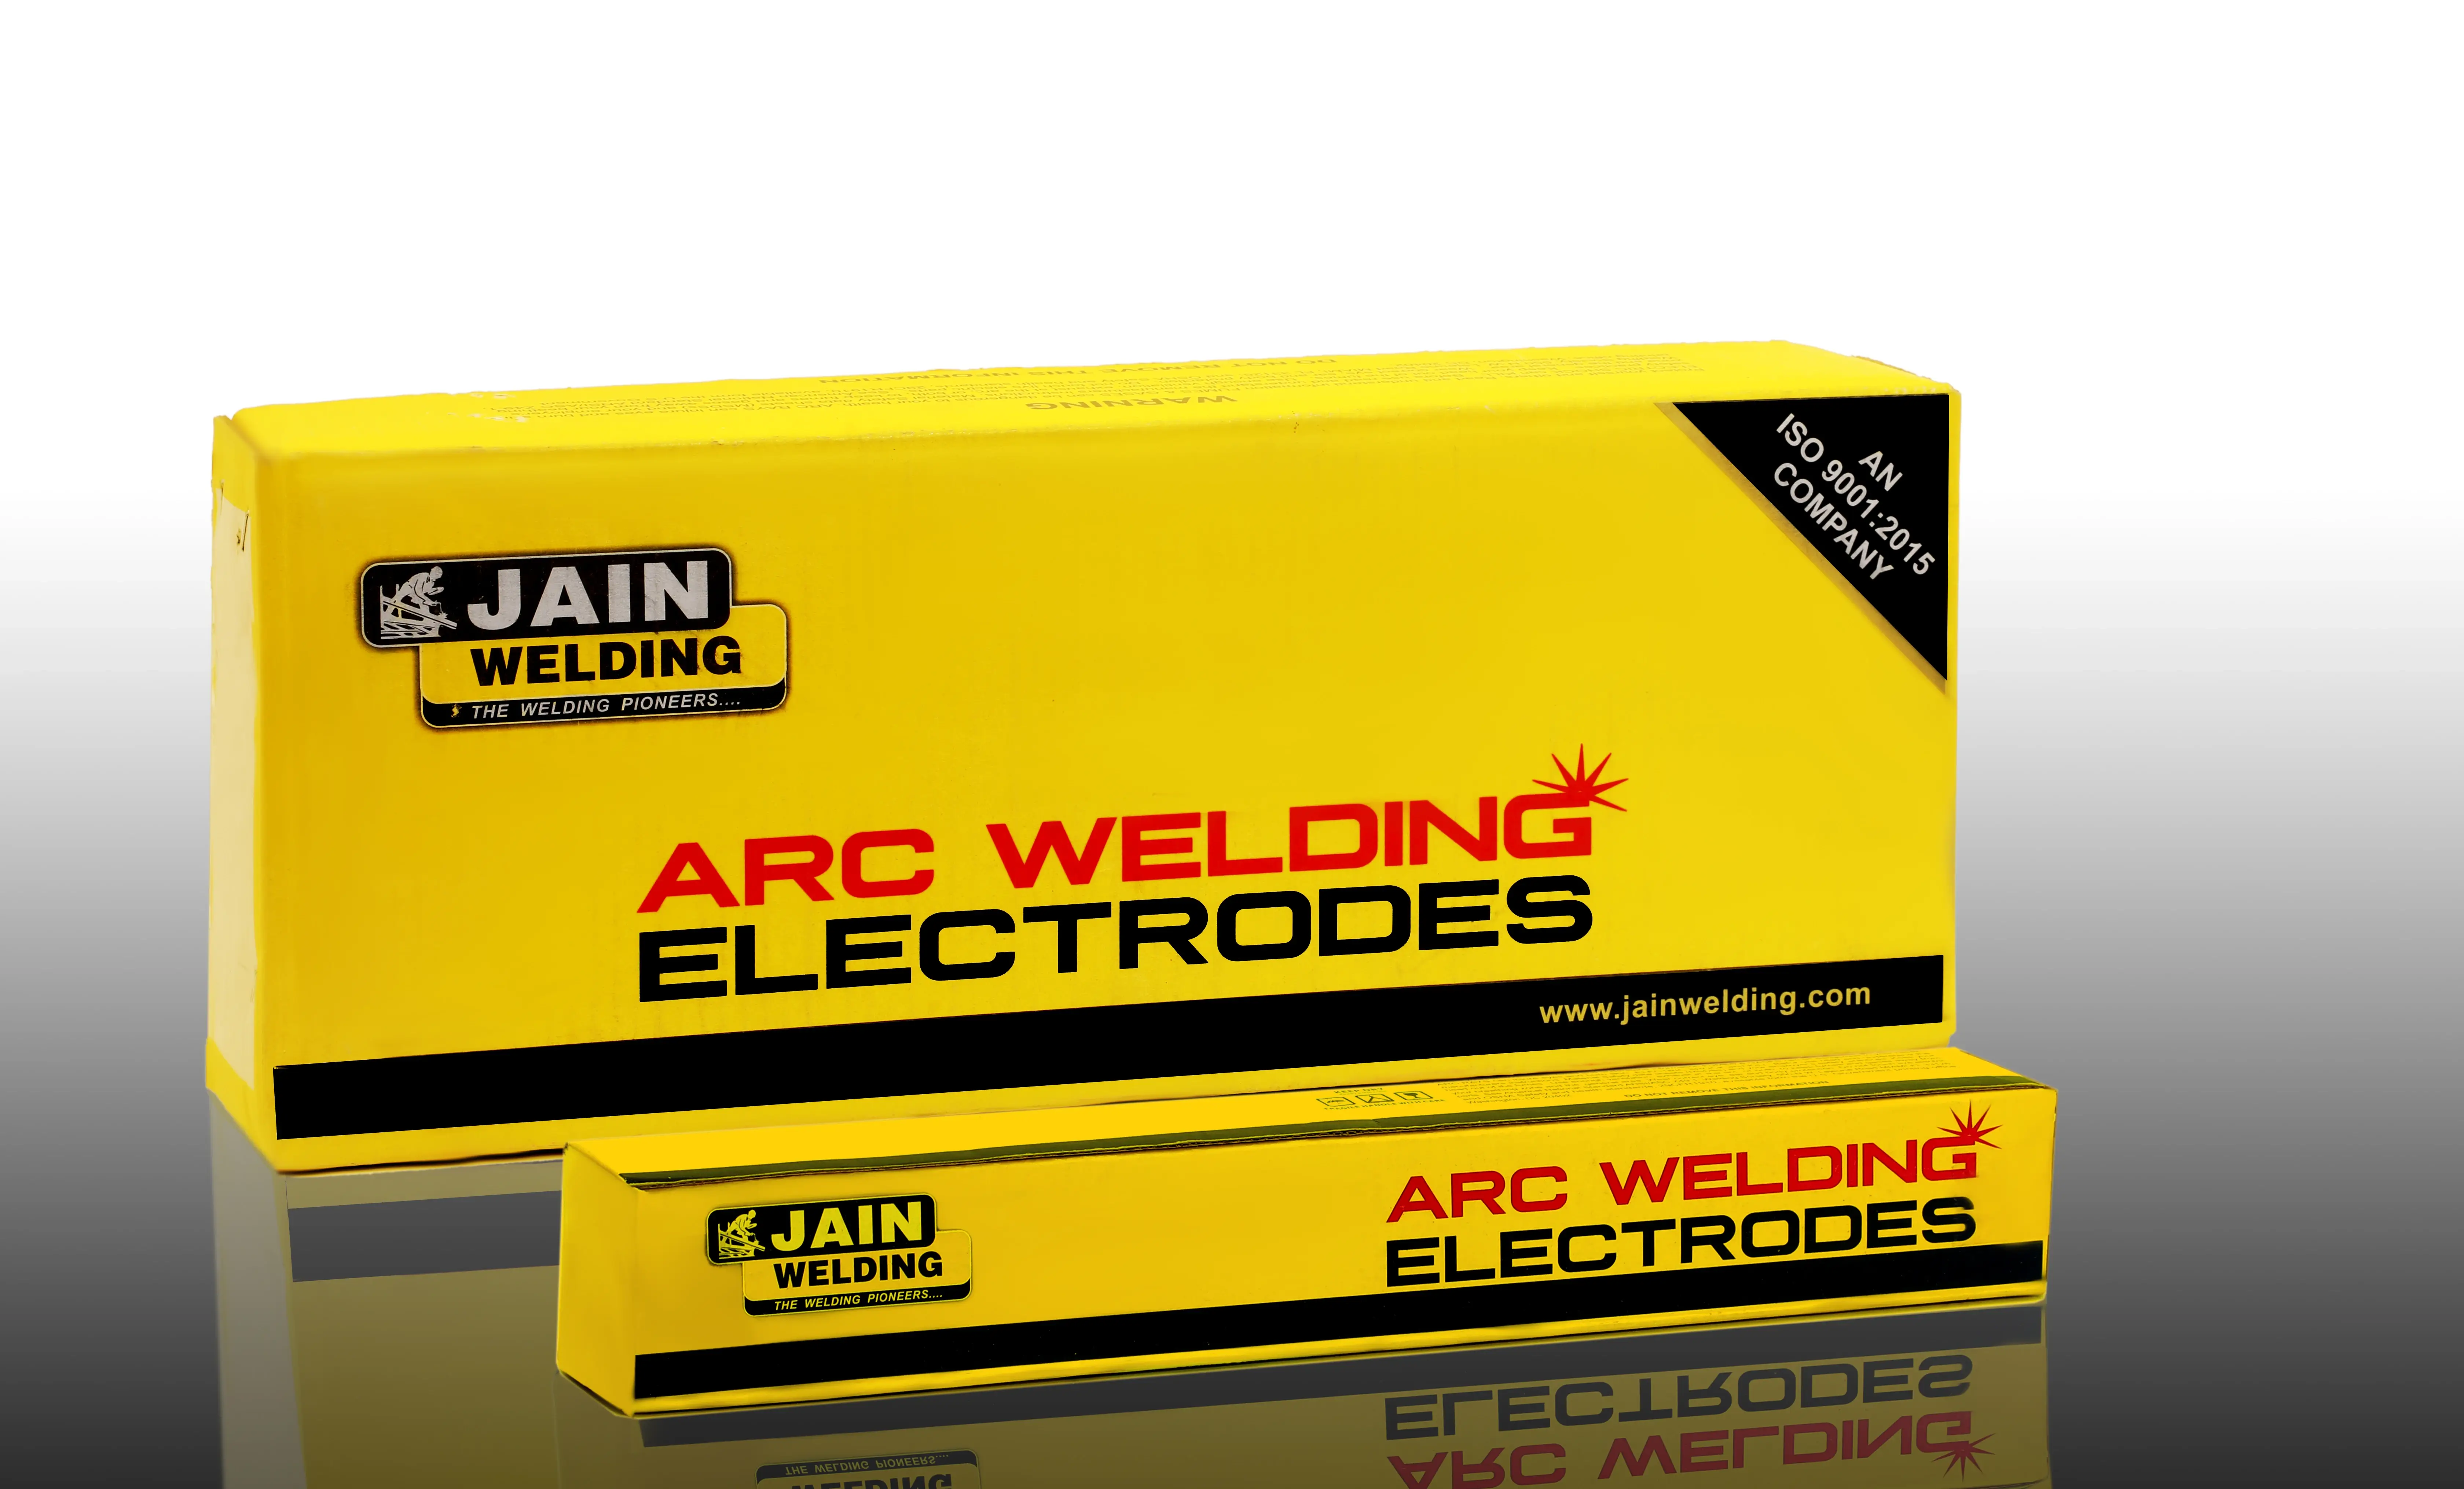 ARC WELDING ELECTRODES